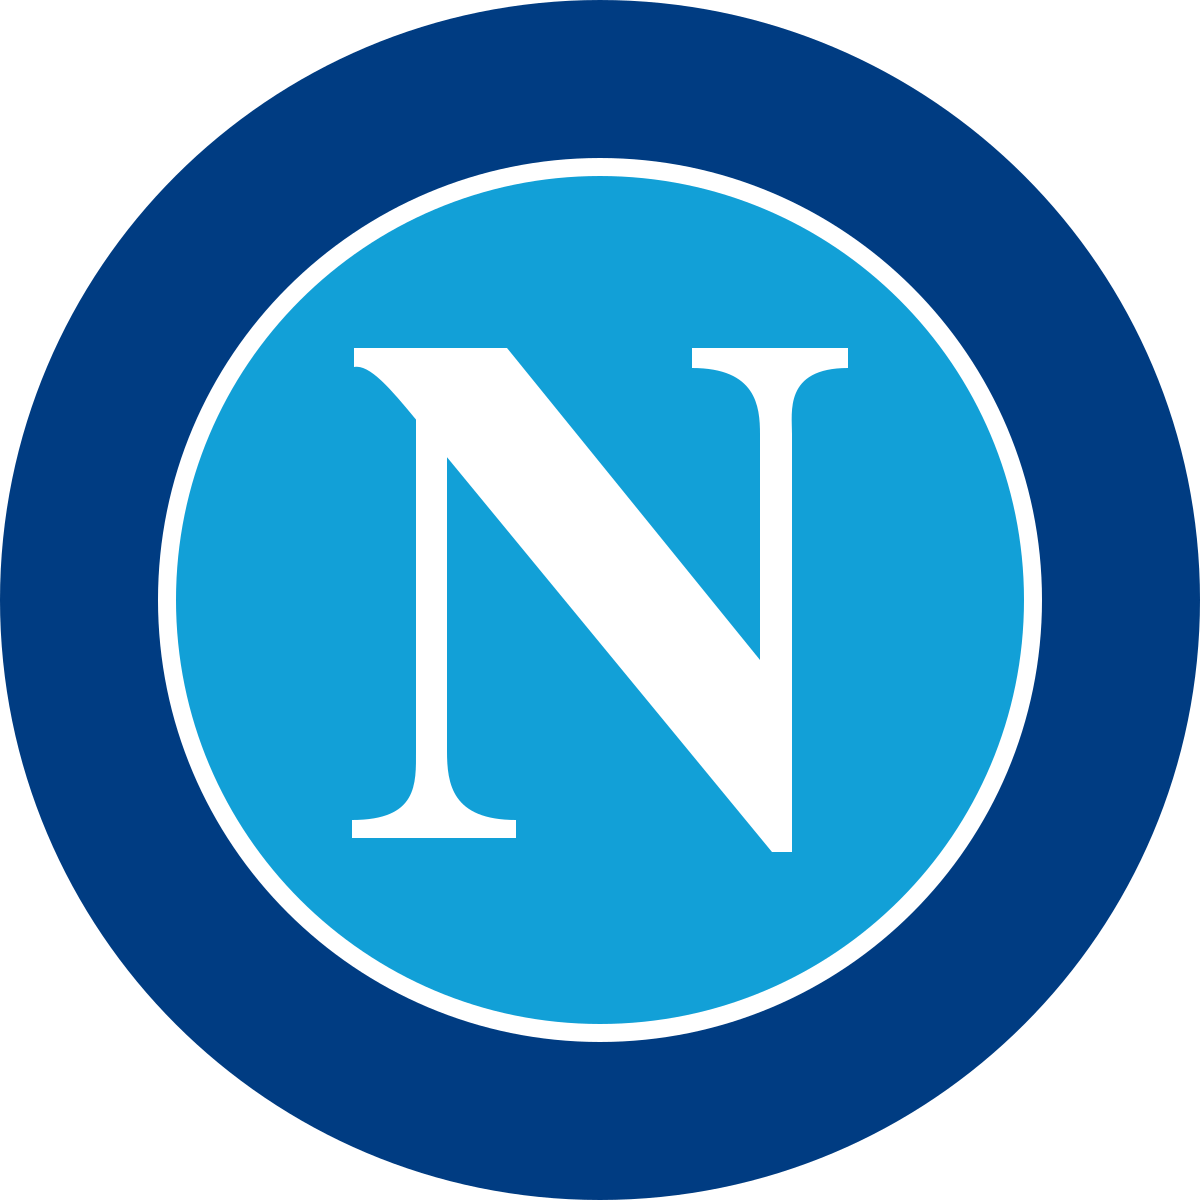 Blue Circle Soccer Logo - S.S.C. Napoli